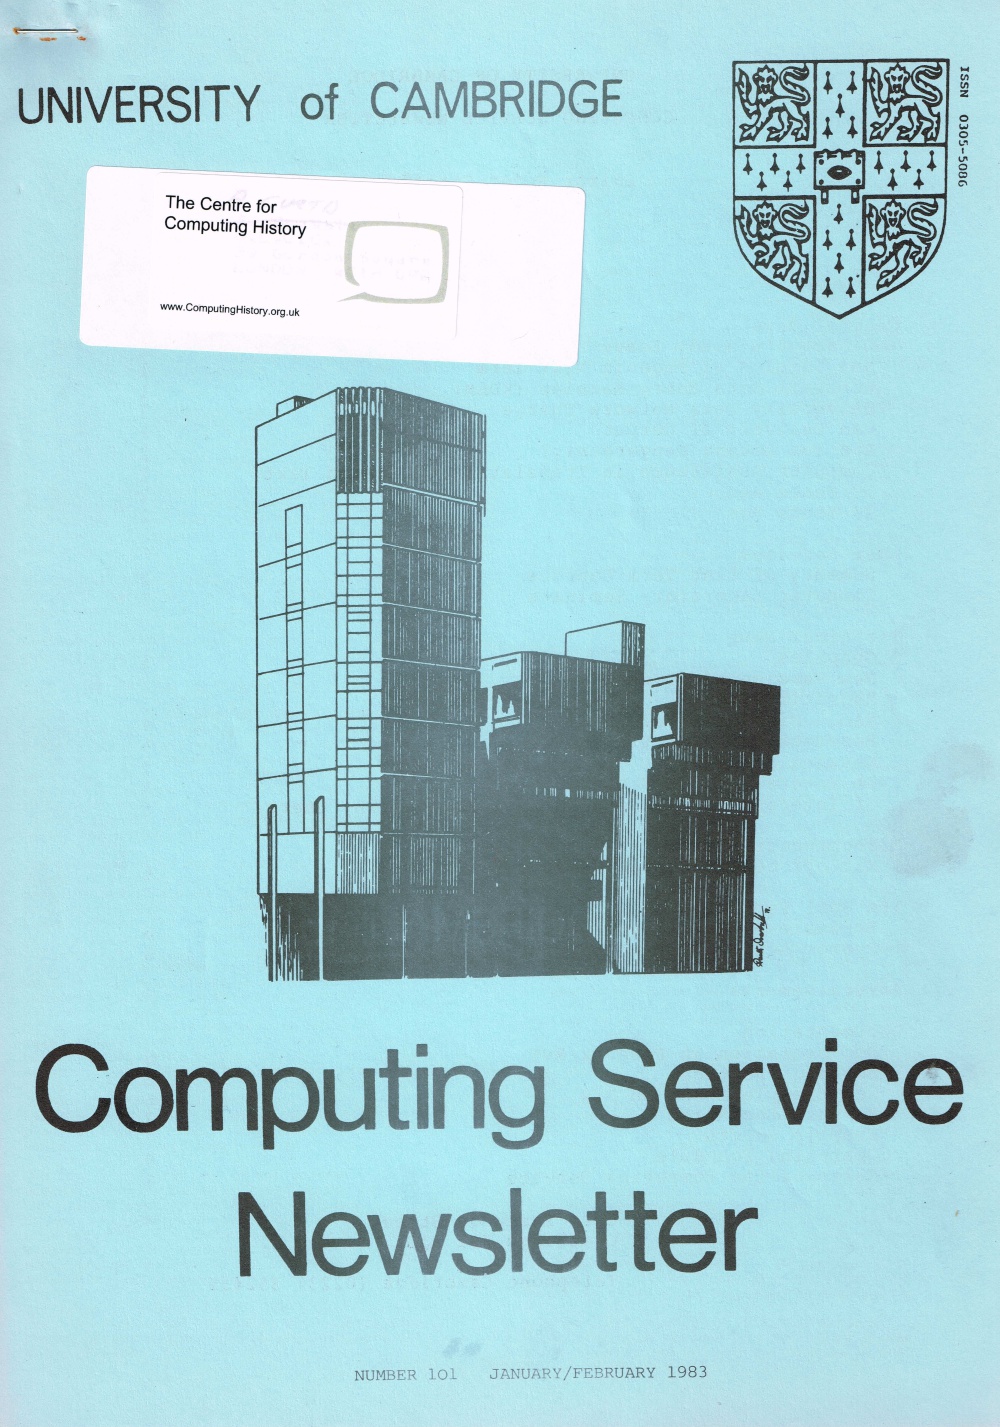 Article: University of Cambridge Computing Service January/February 1983 Newsletter 101